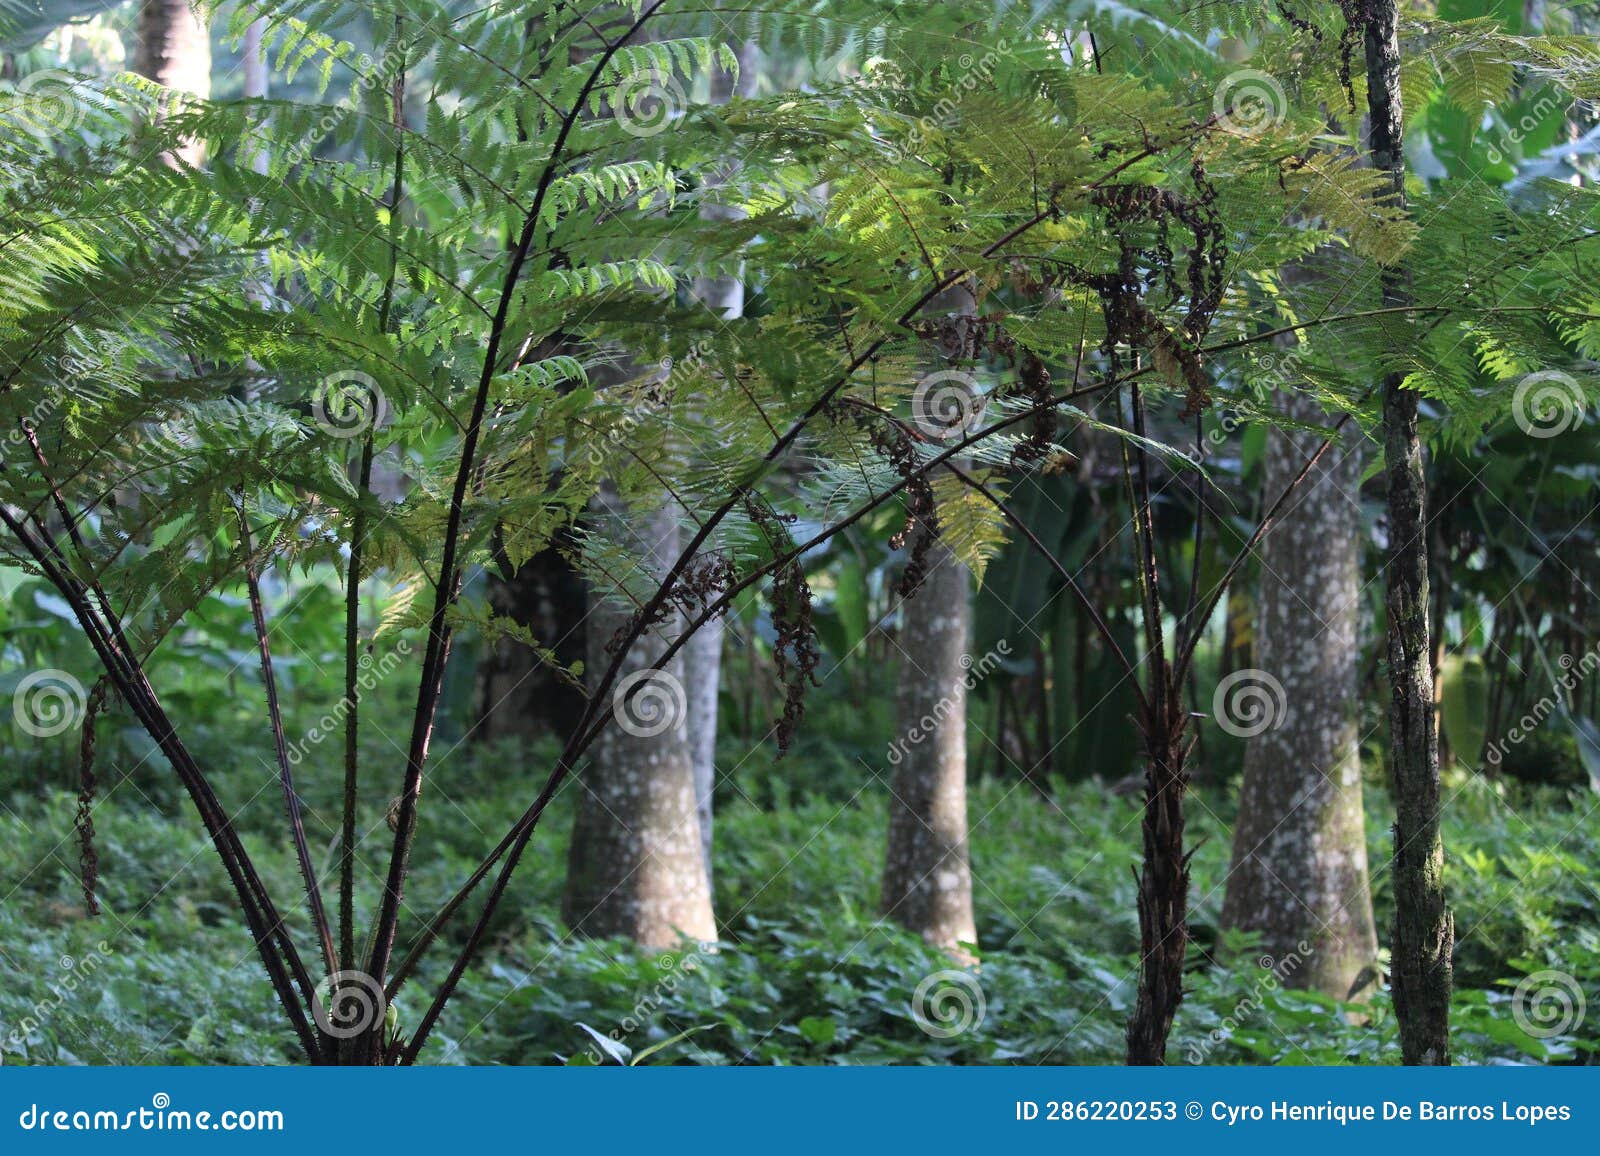 west indian treefern, cyathea arborea, helecho gigante, palo camarÃ³n, american species, introduced ornamental species